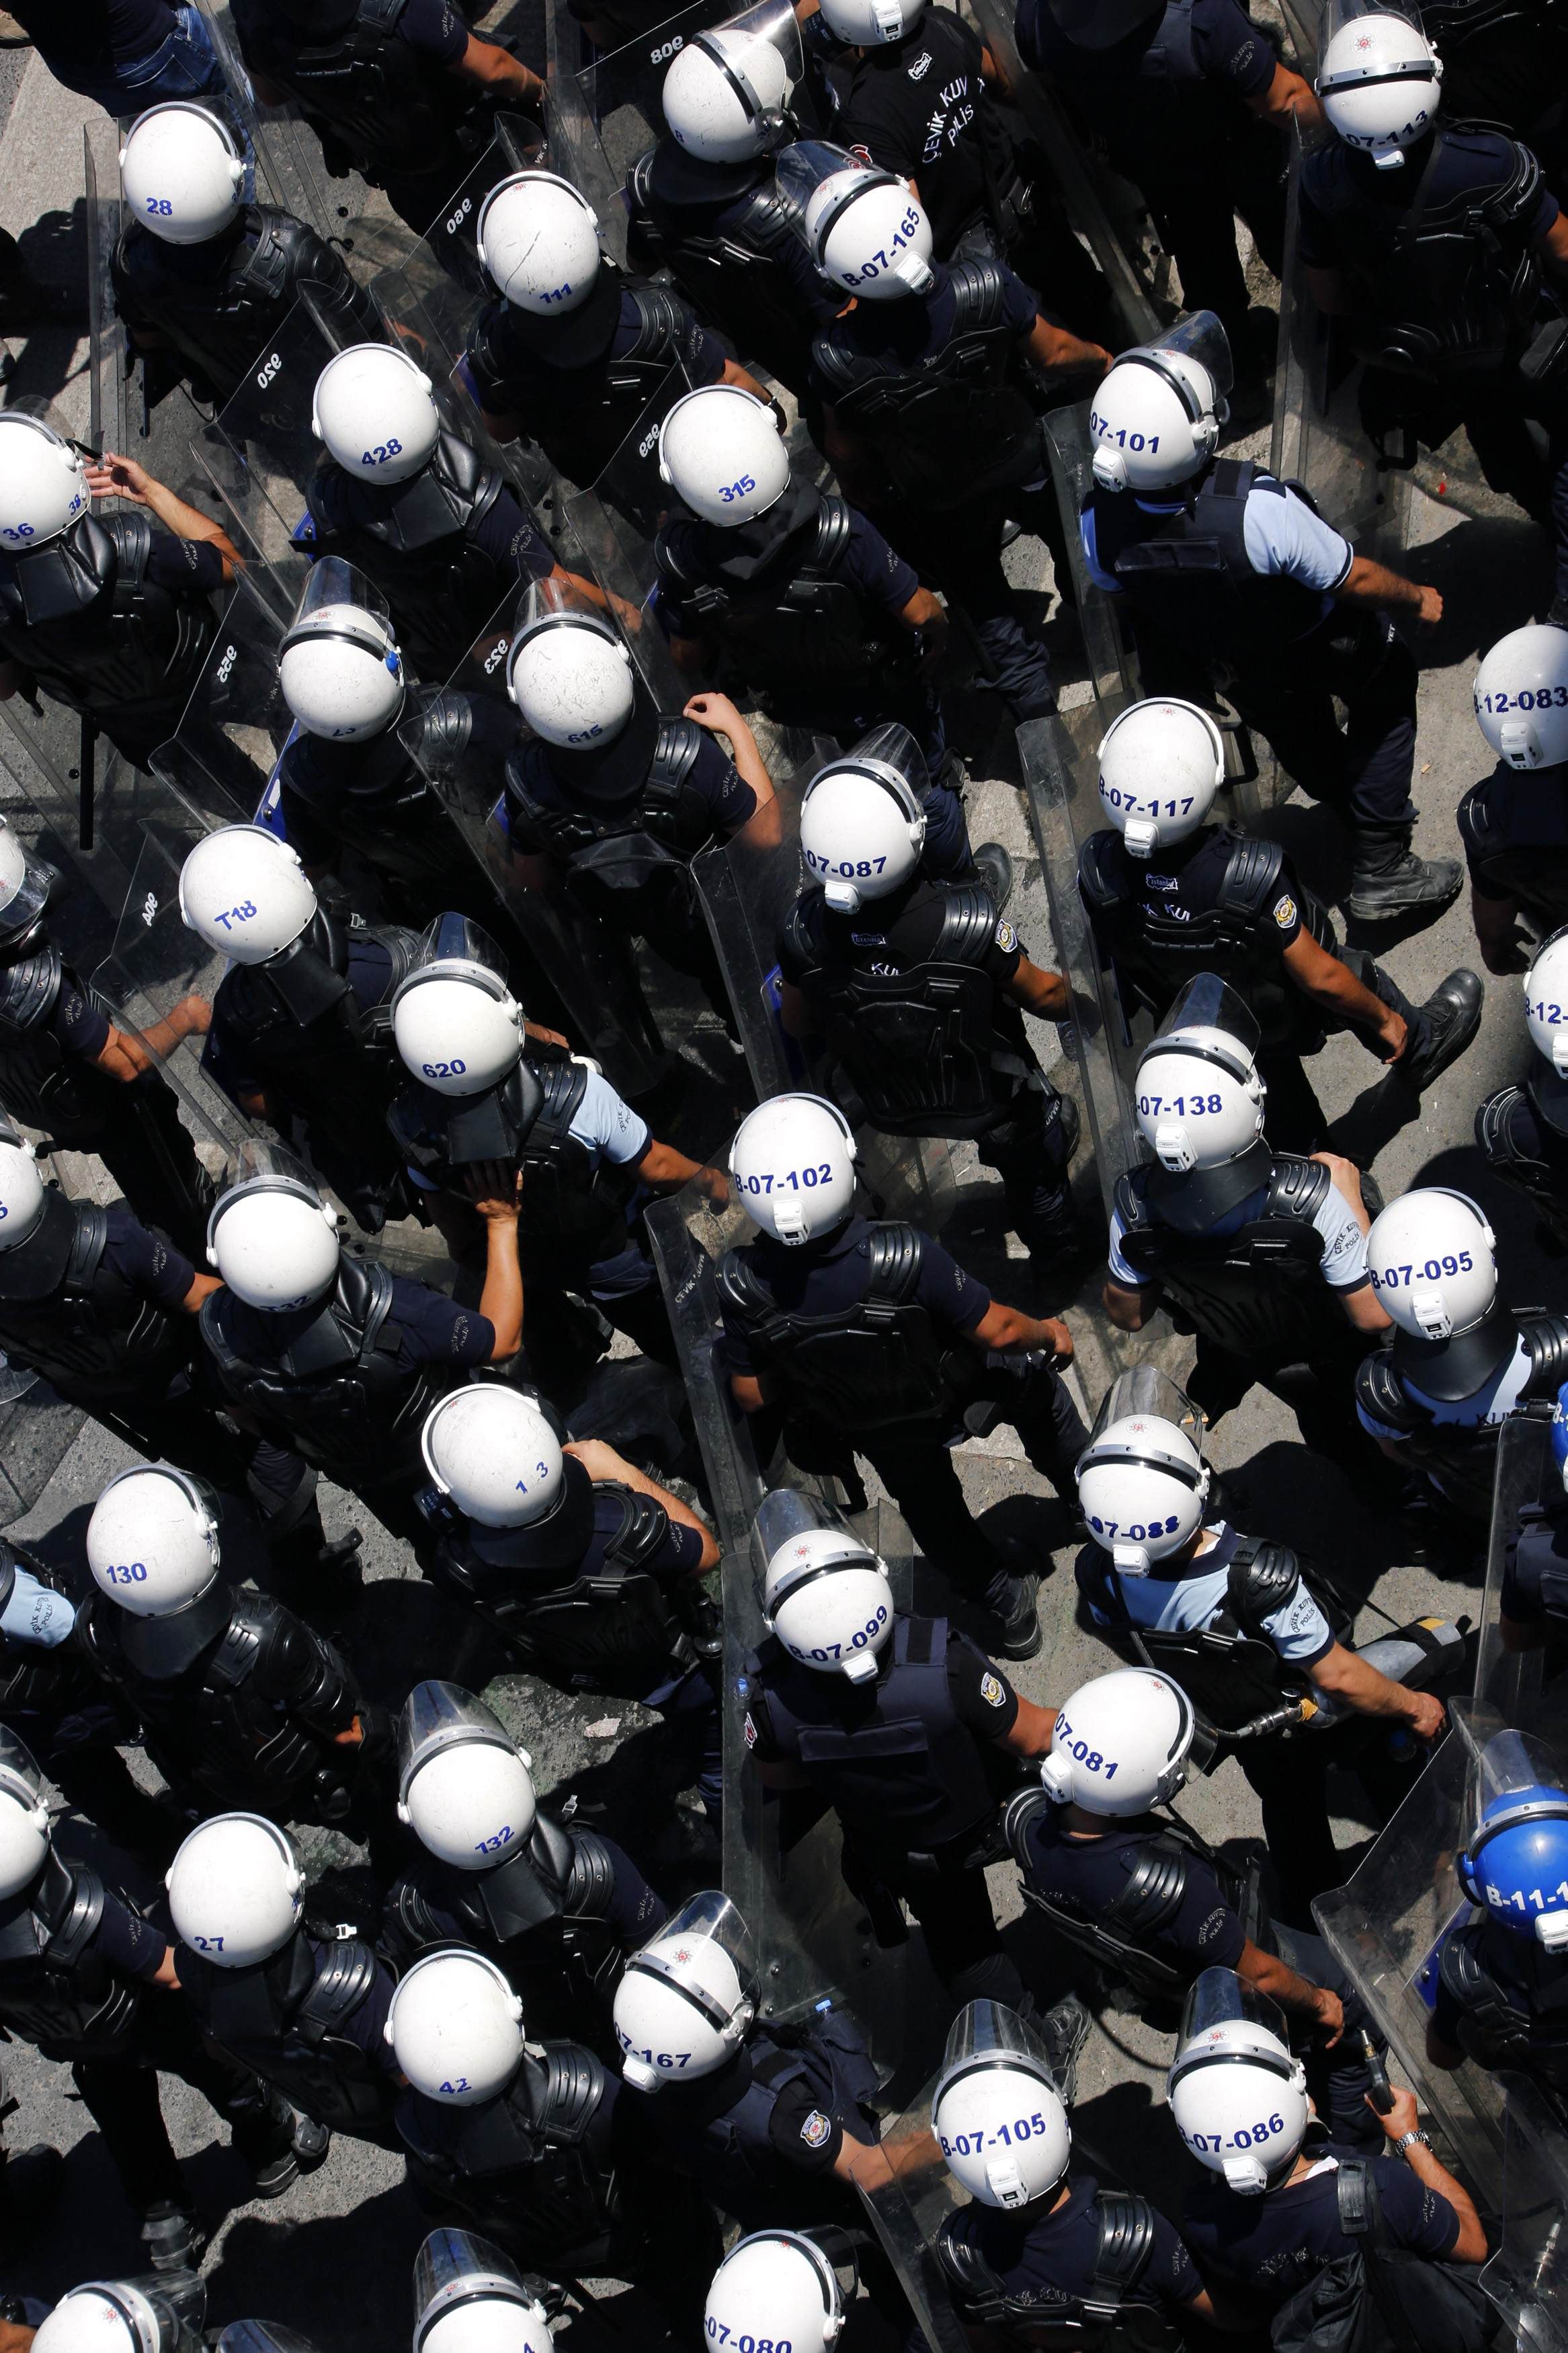 Riot Police March Through Taksim Square